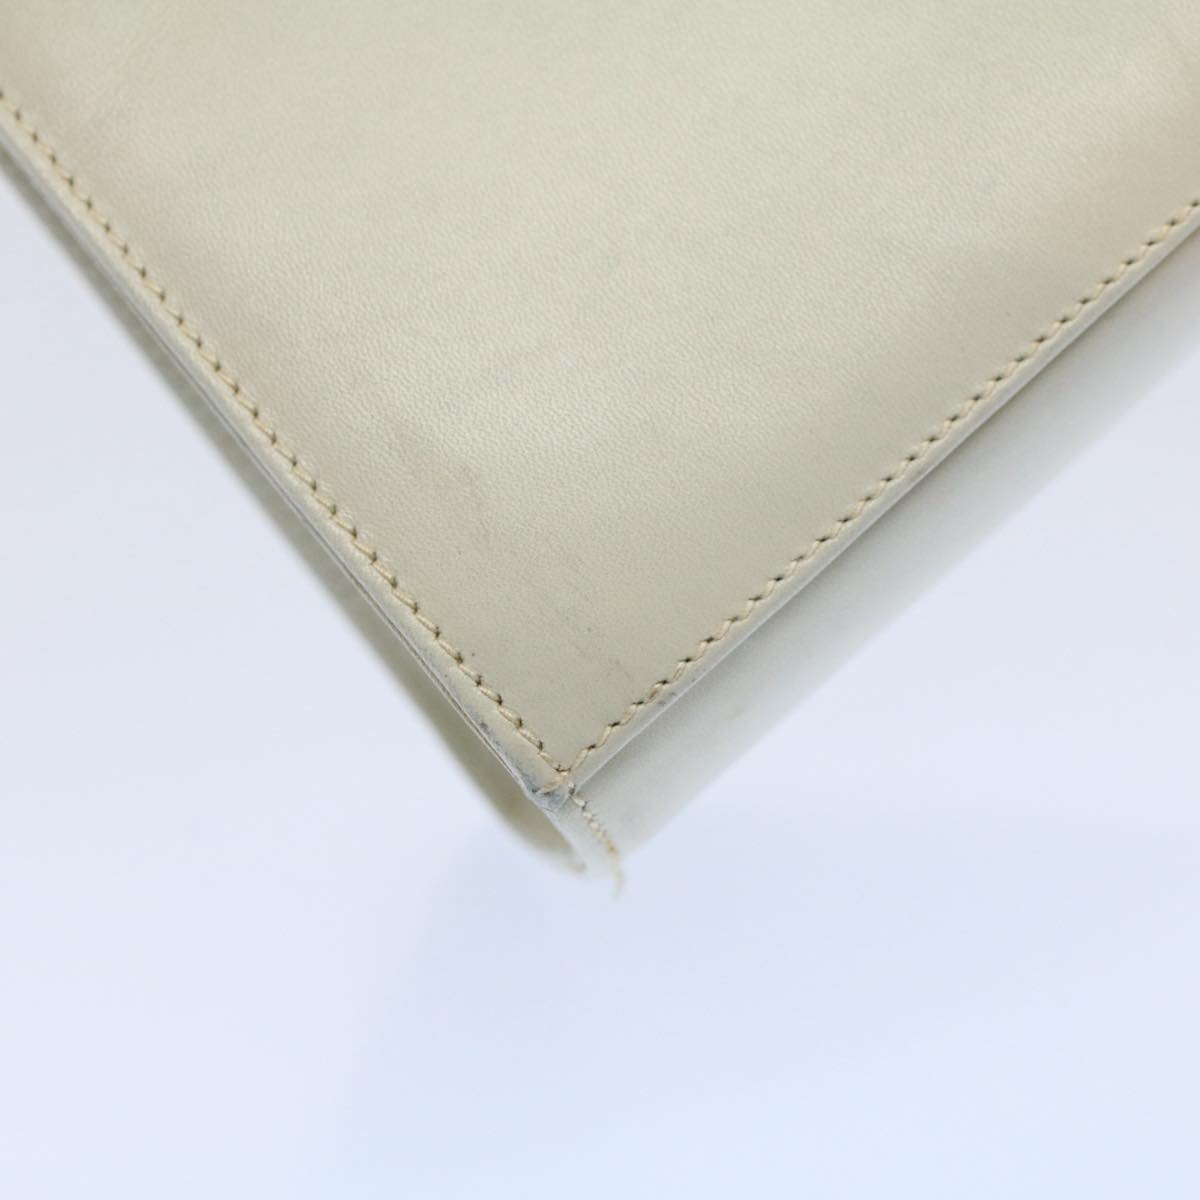 Salvatore Ferragamo Gancini Chain Shoulder Bag Leather White Auth yk9463